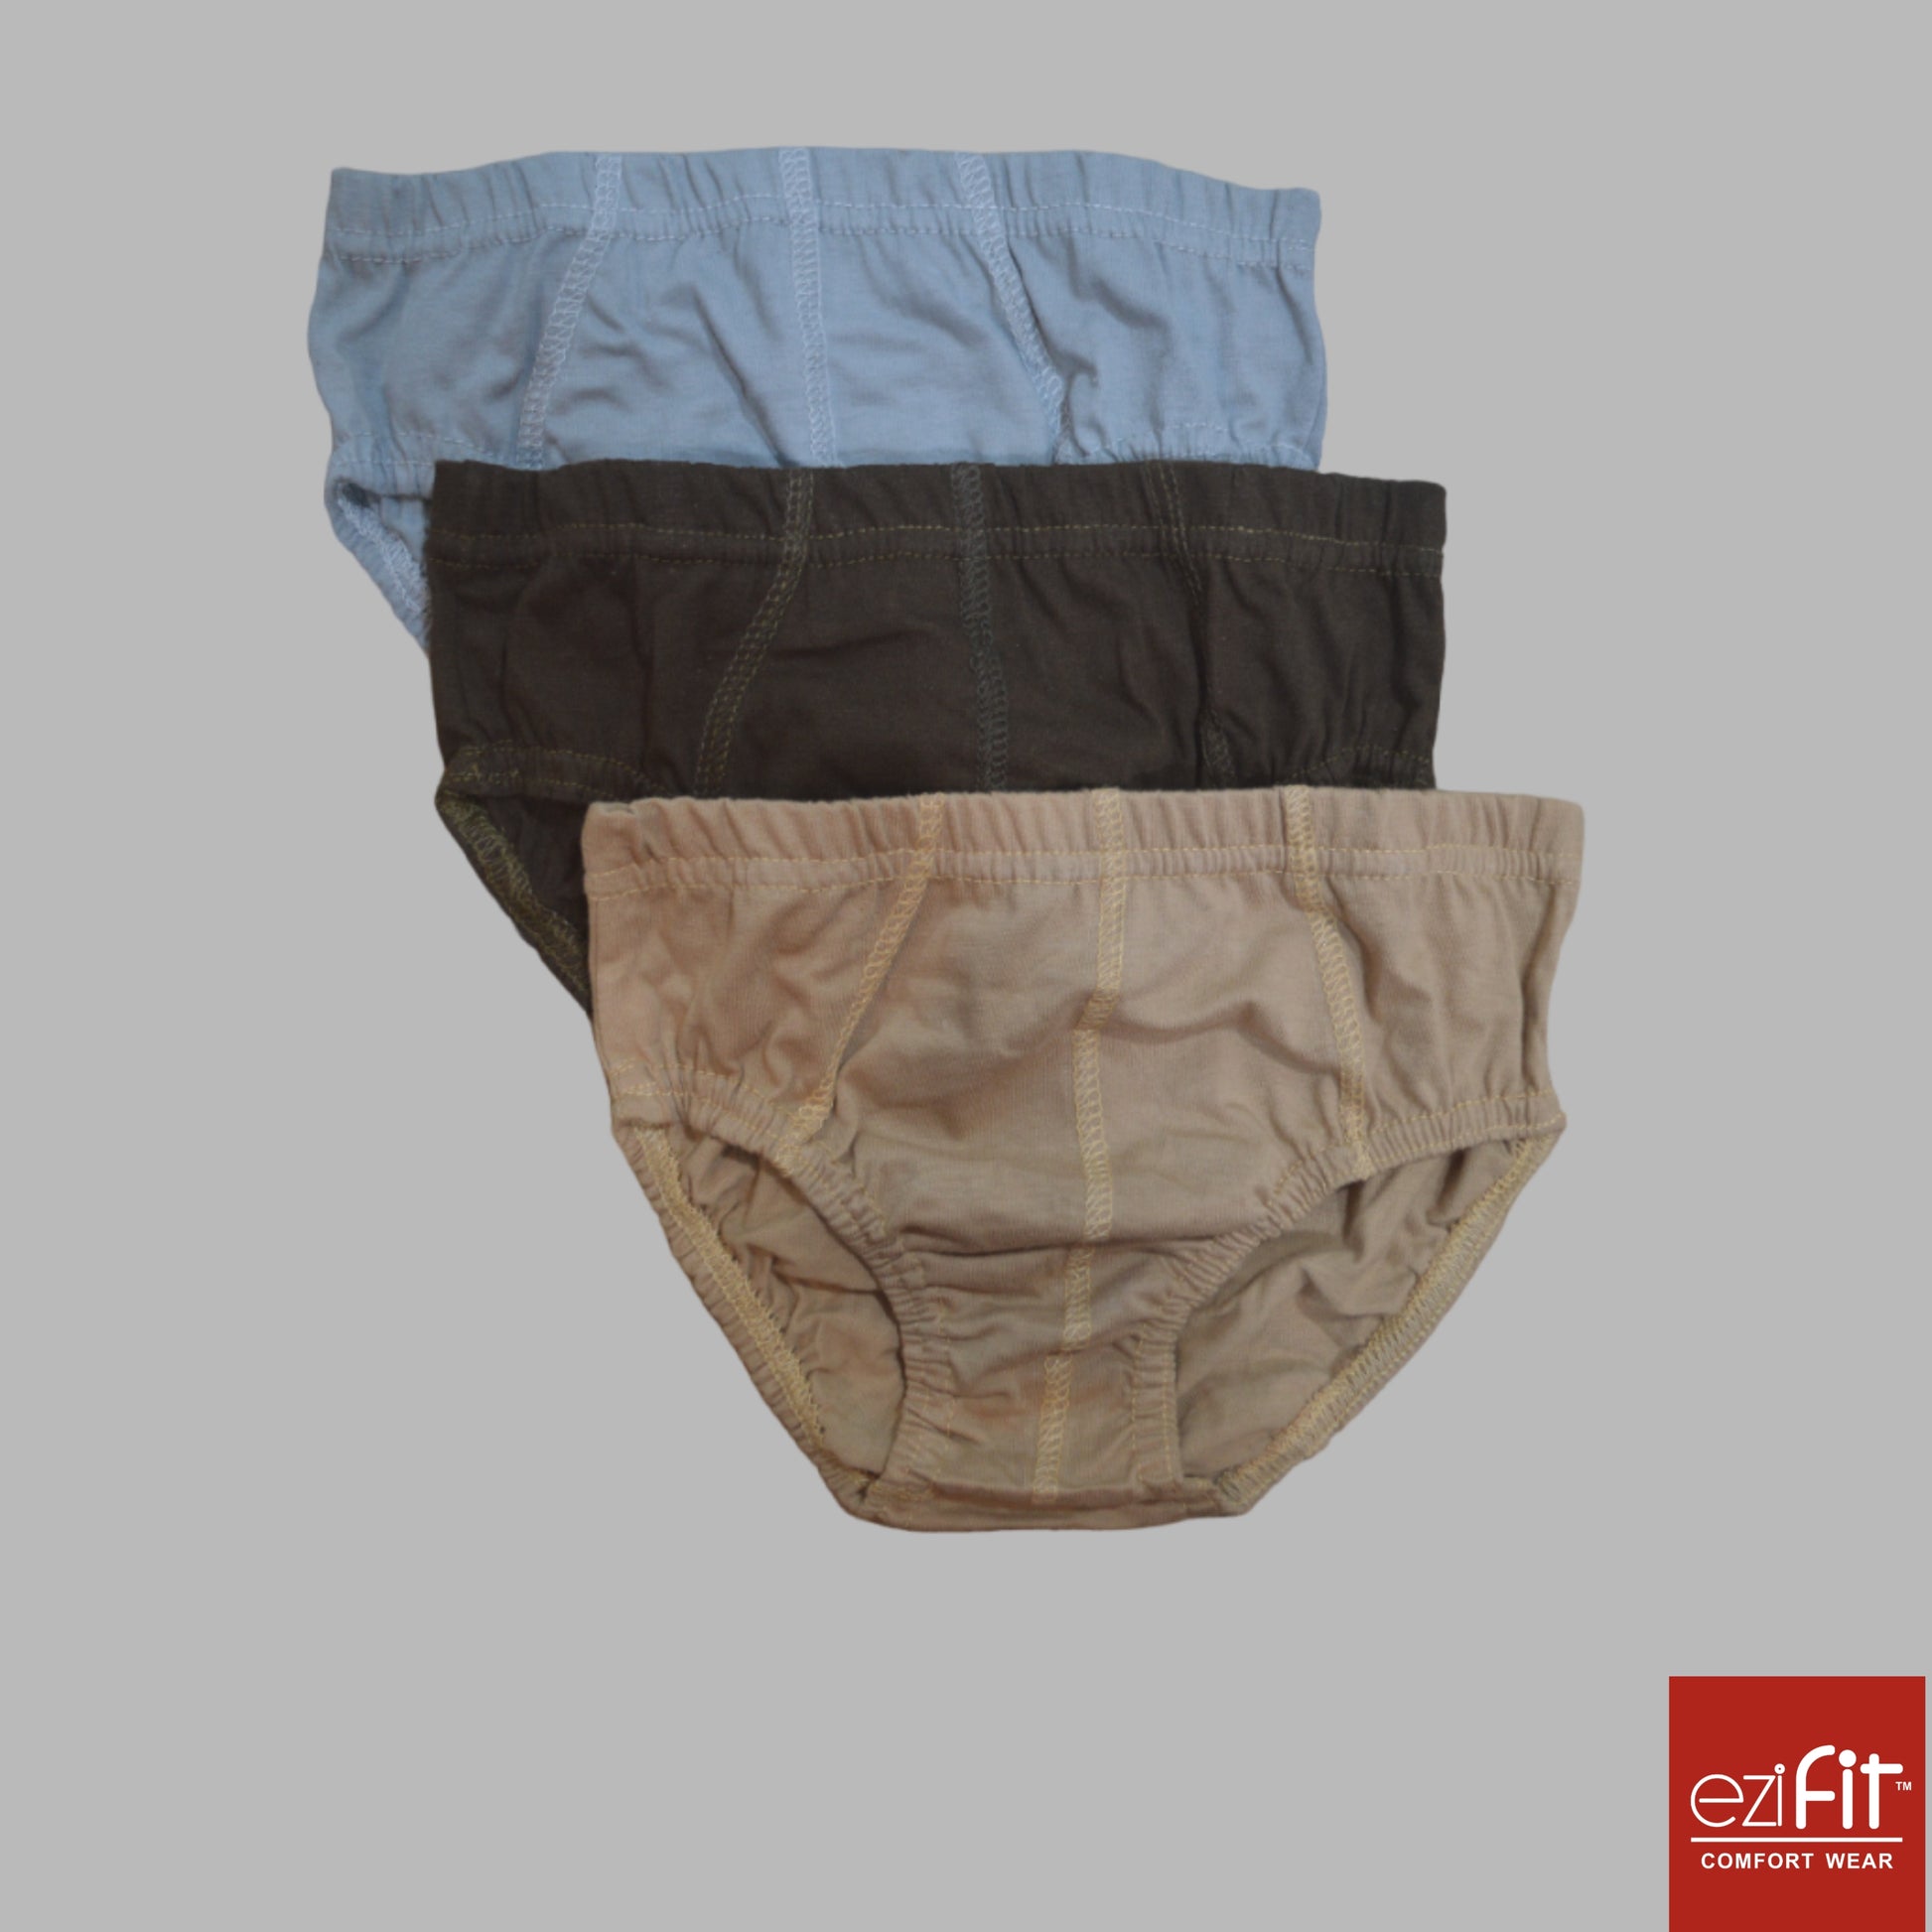 EziFit Pure Combed Cotton Fabric Underwear Briefs For Men